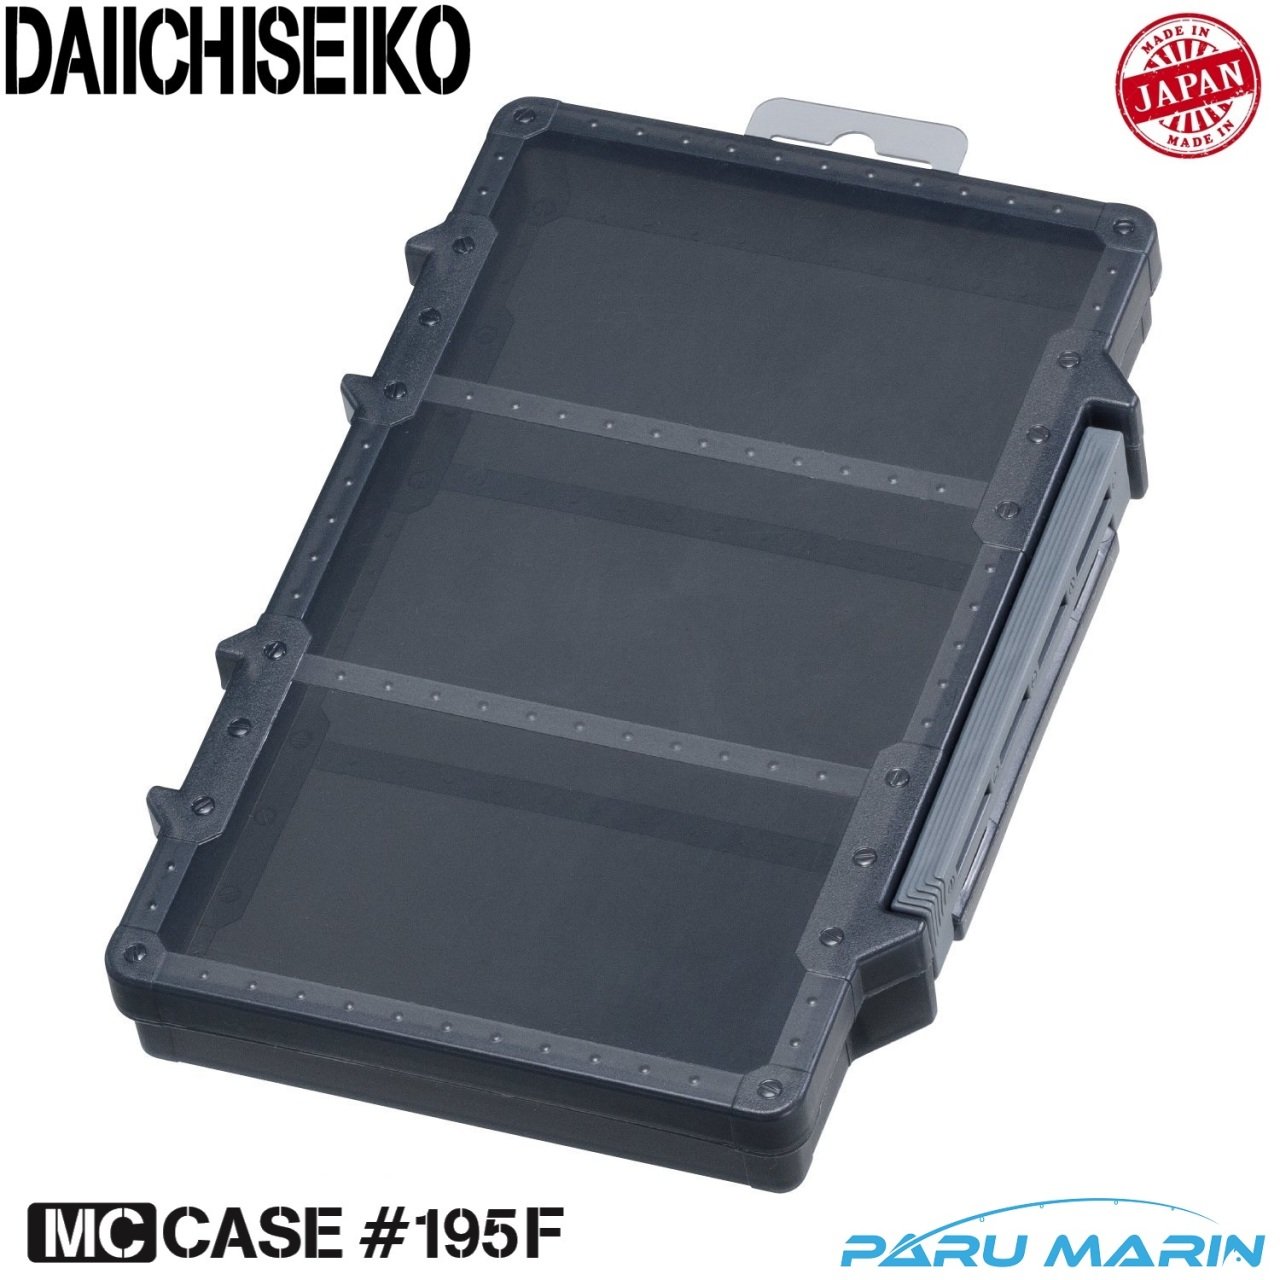 Daiichiseiko MC Case 195F Sahte ve Aksesuar Kutusu Black